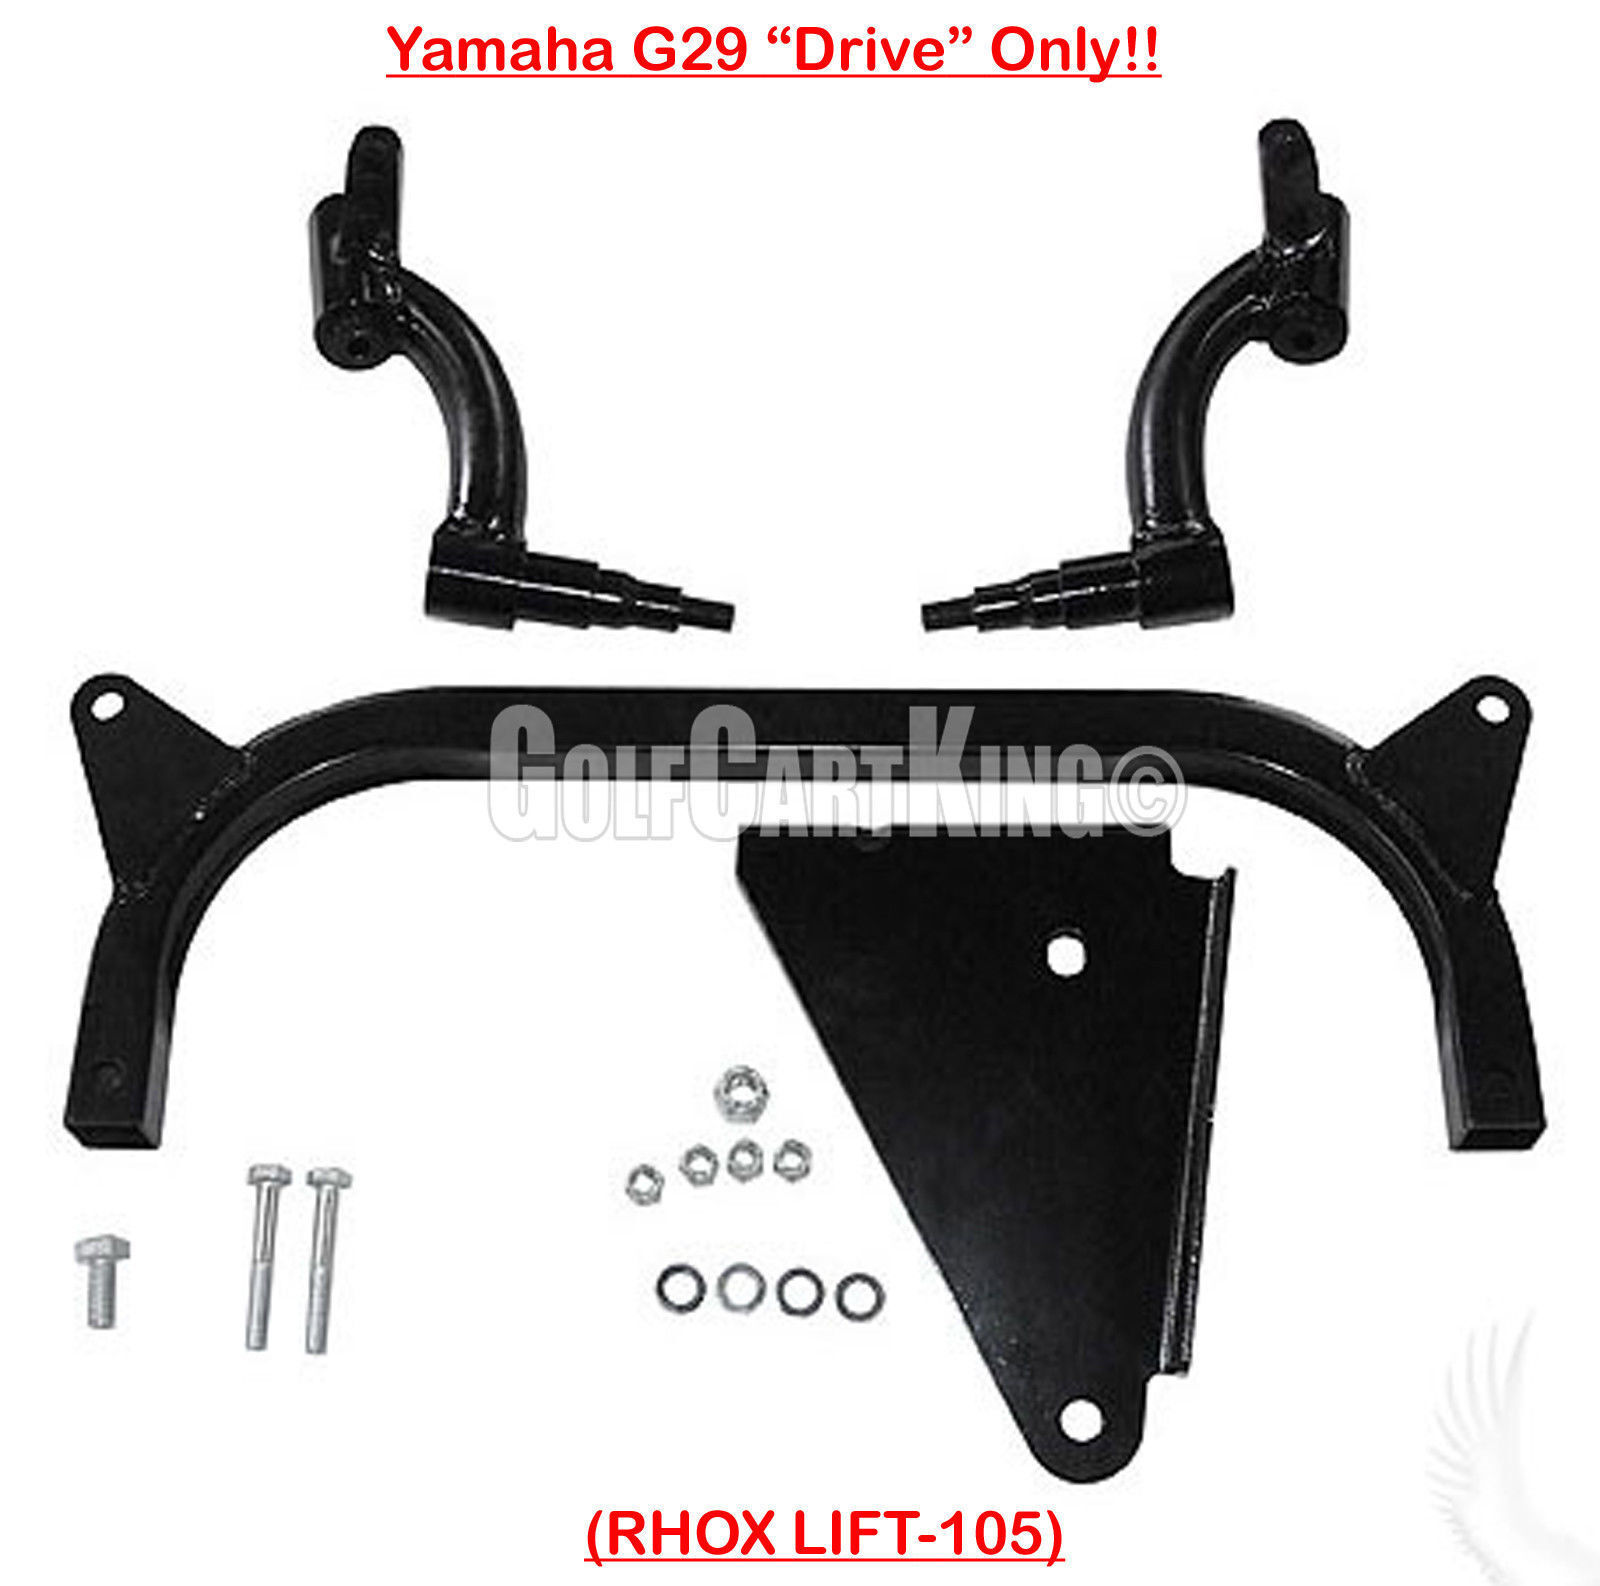 RHOX 6 inch Lift Kit for Yamaha G29 Drive and Drive 2 Golf Cart